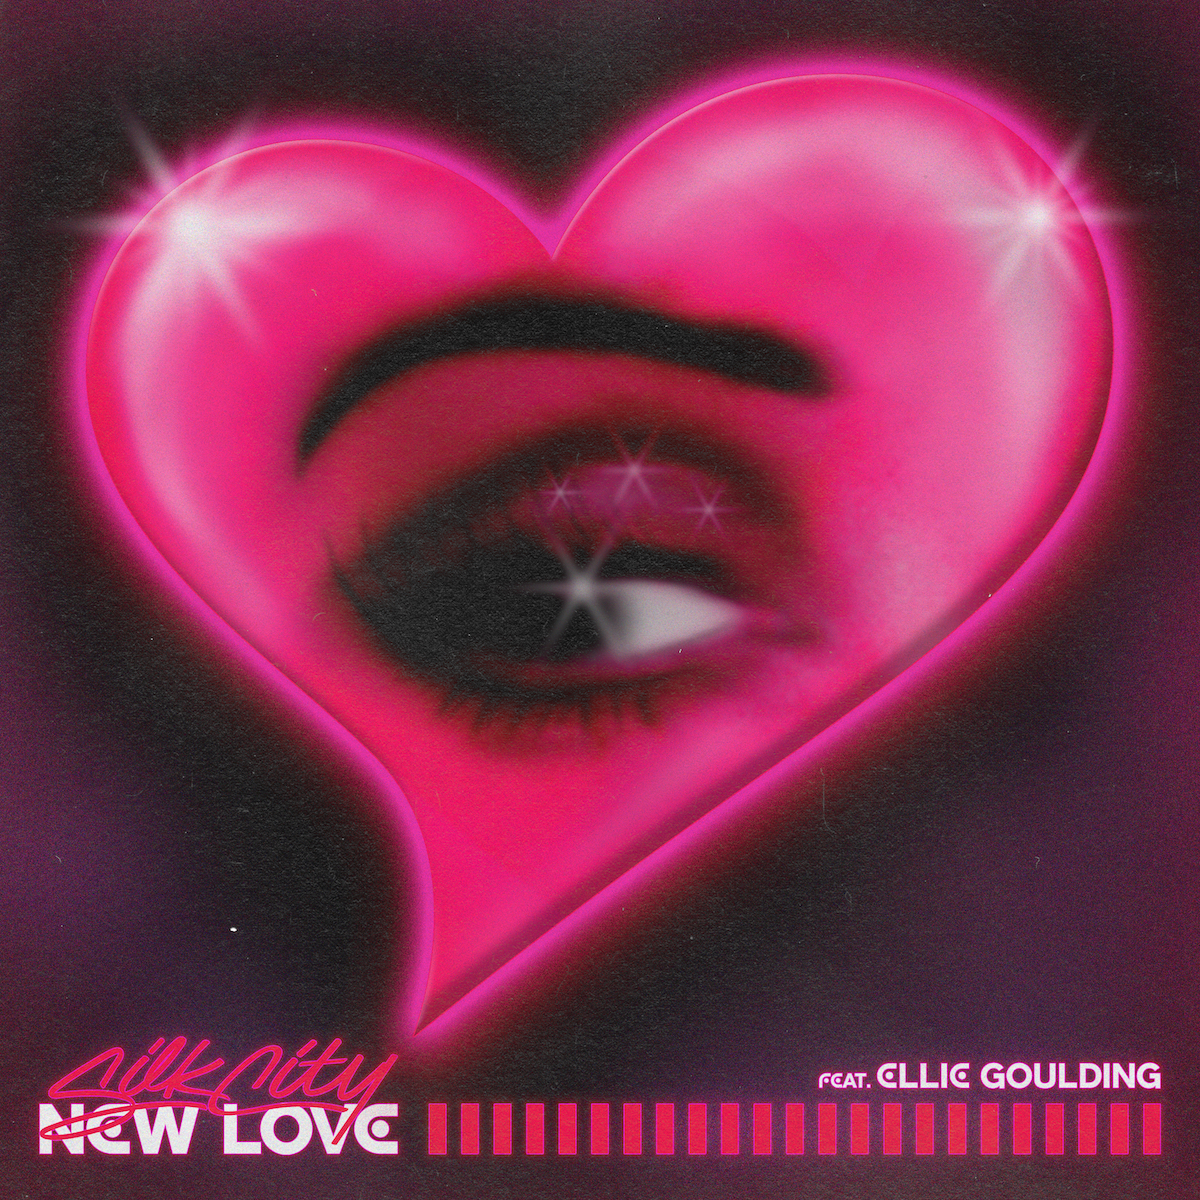 Silk City, Ellie Goulding, Diplo, Mark Ronson - New Love piano sheet music